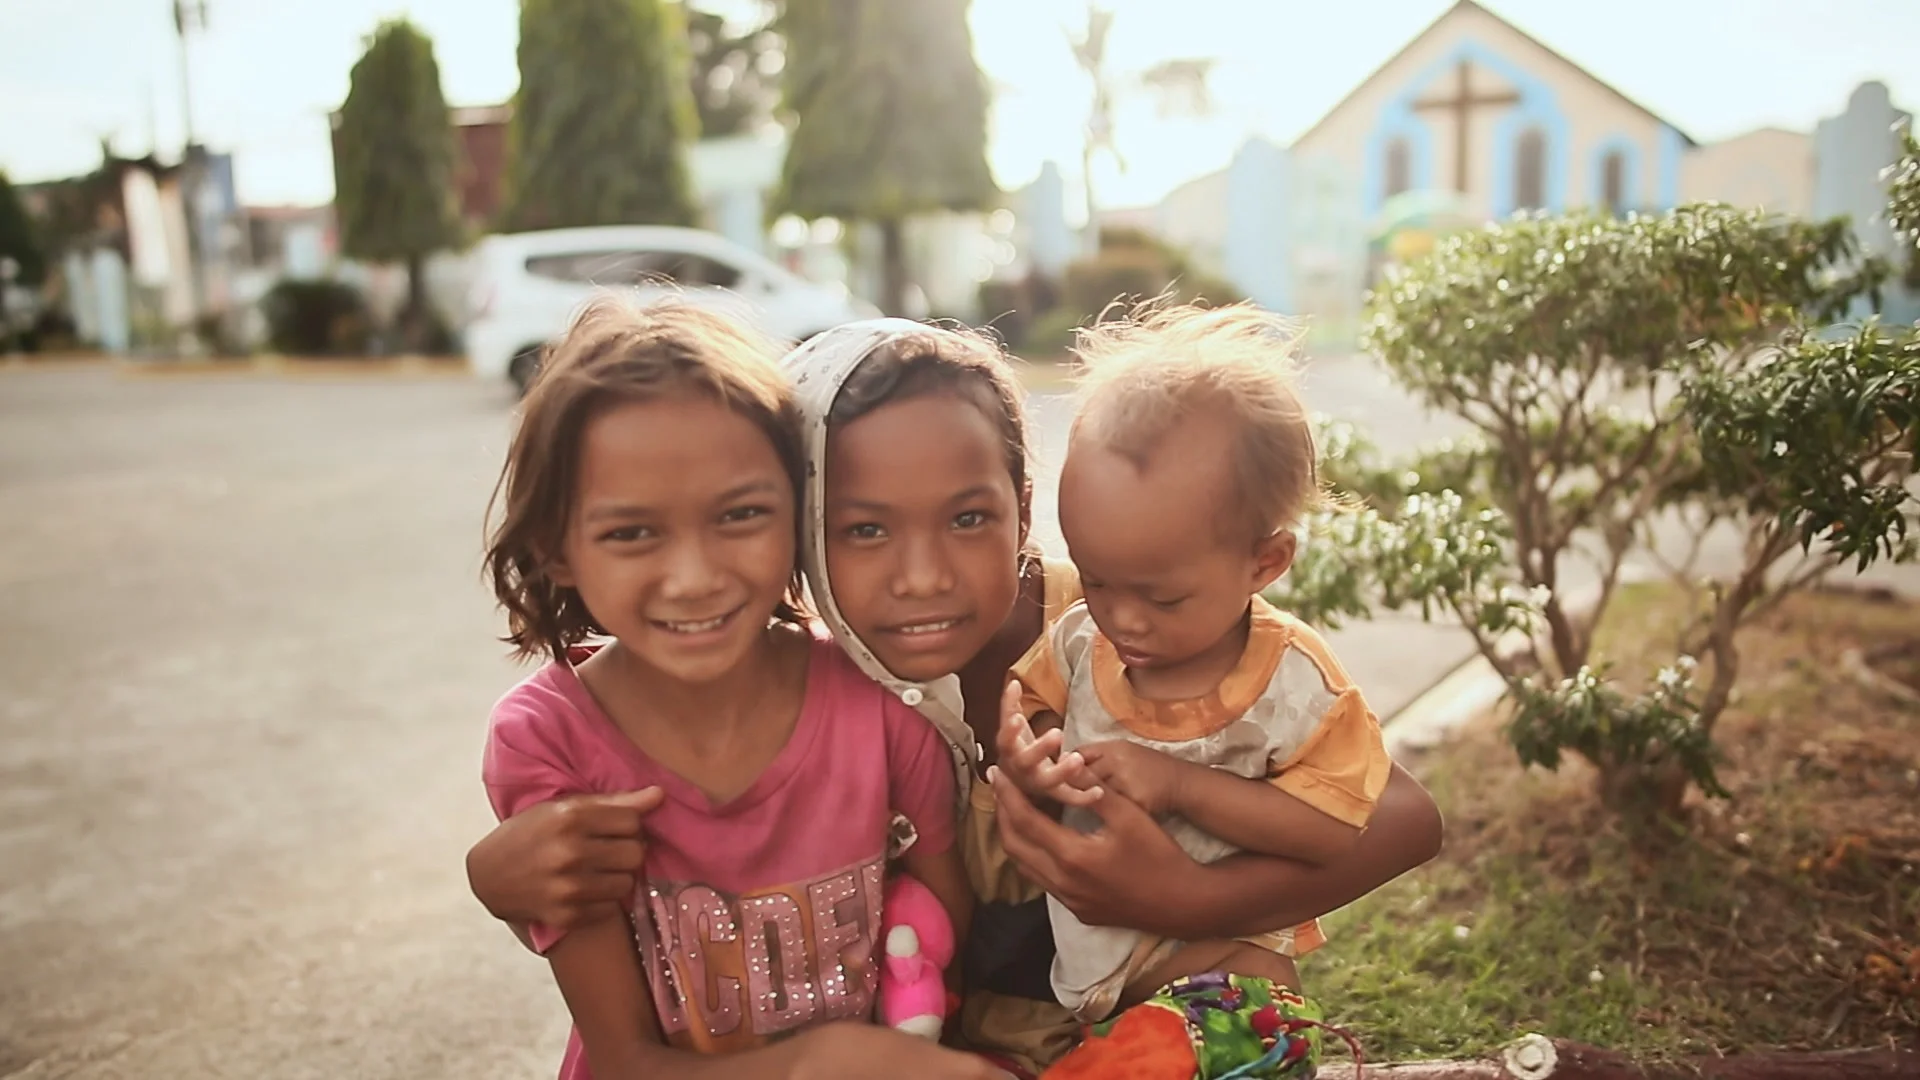 poor filipino children smiling